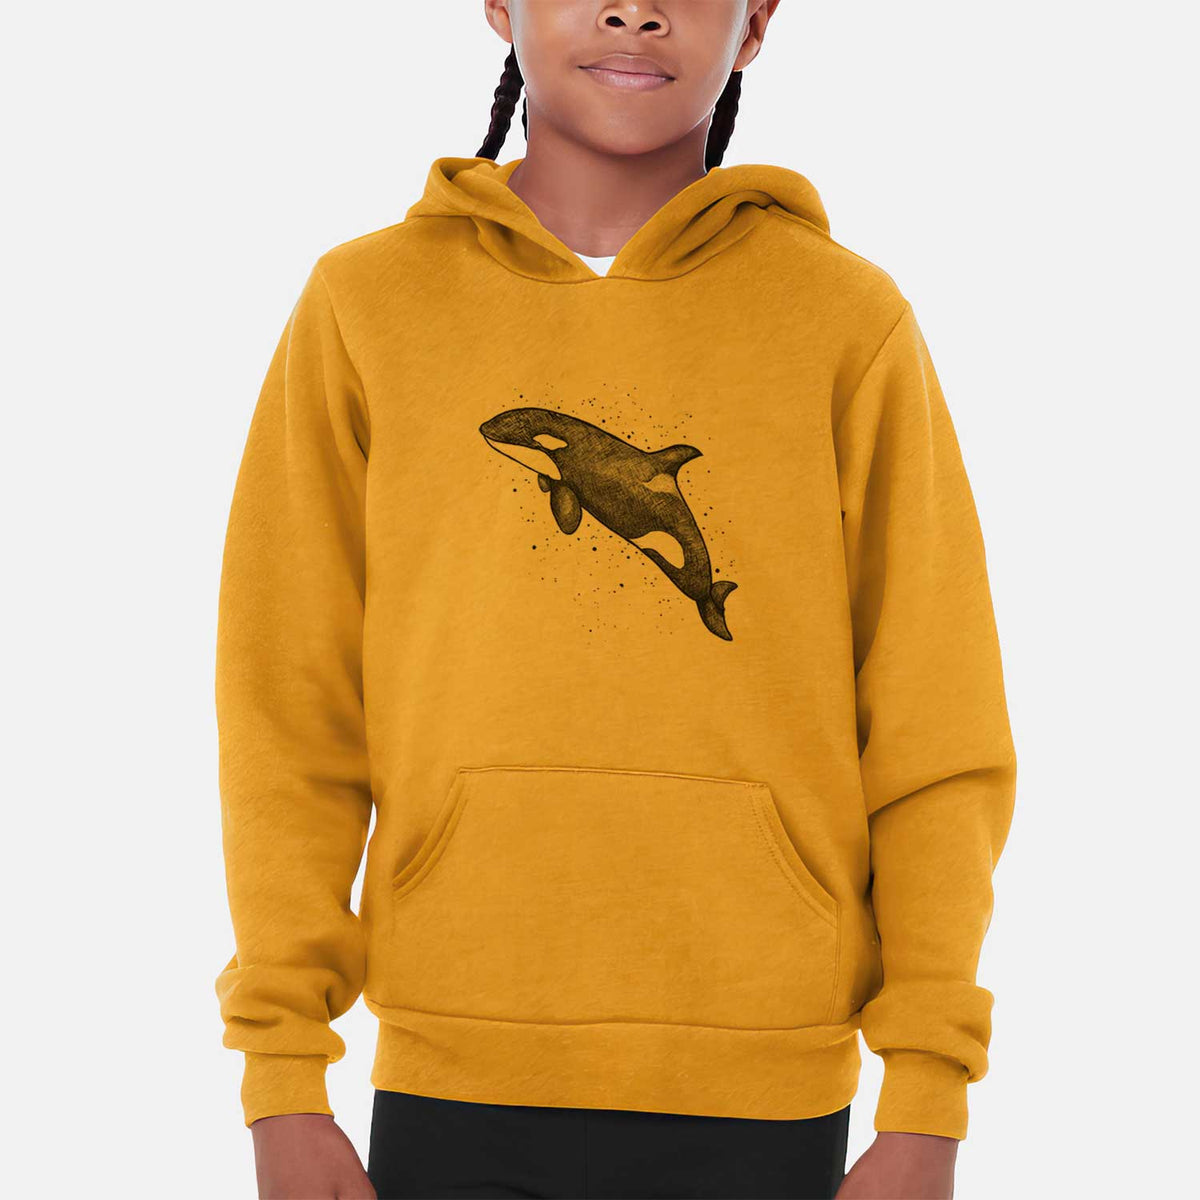 Orca Whale - Youth Hoodie Sweatshirt